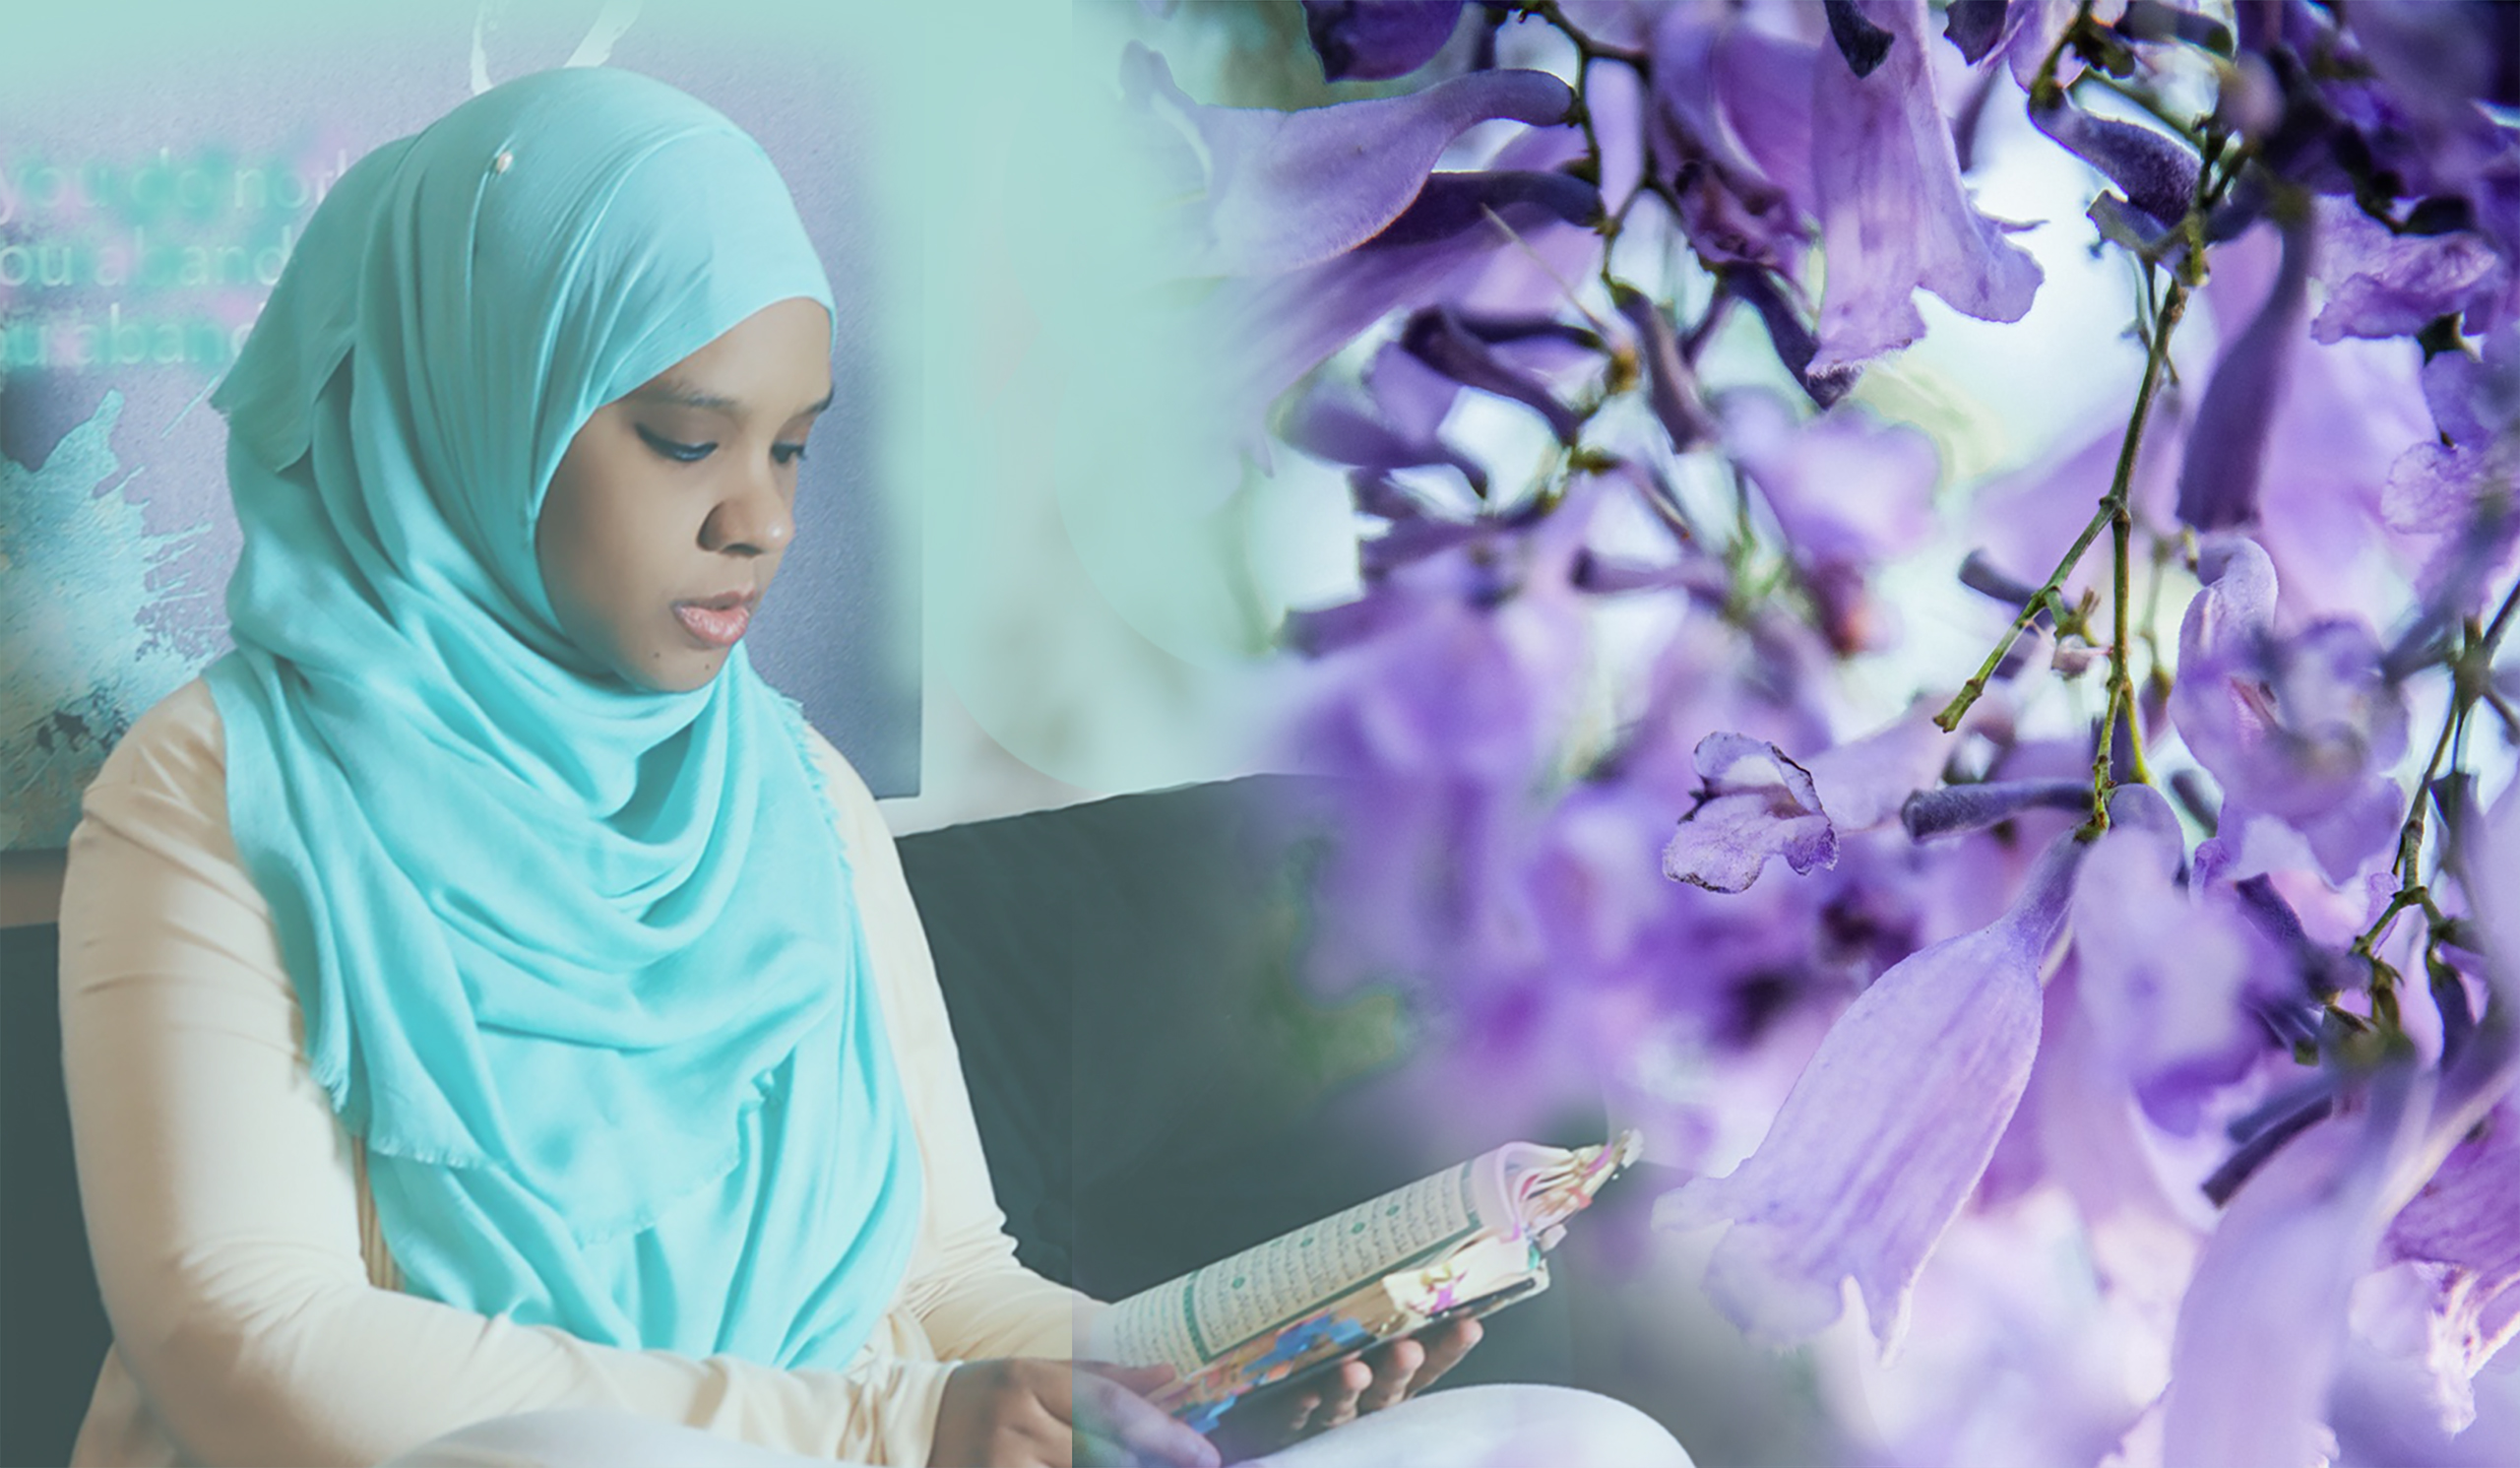 Photo of Umm Zakiyyah in blue hijab